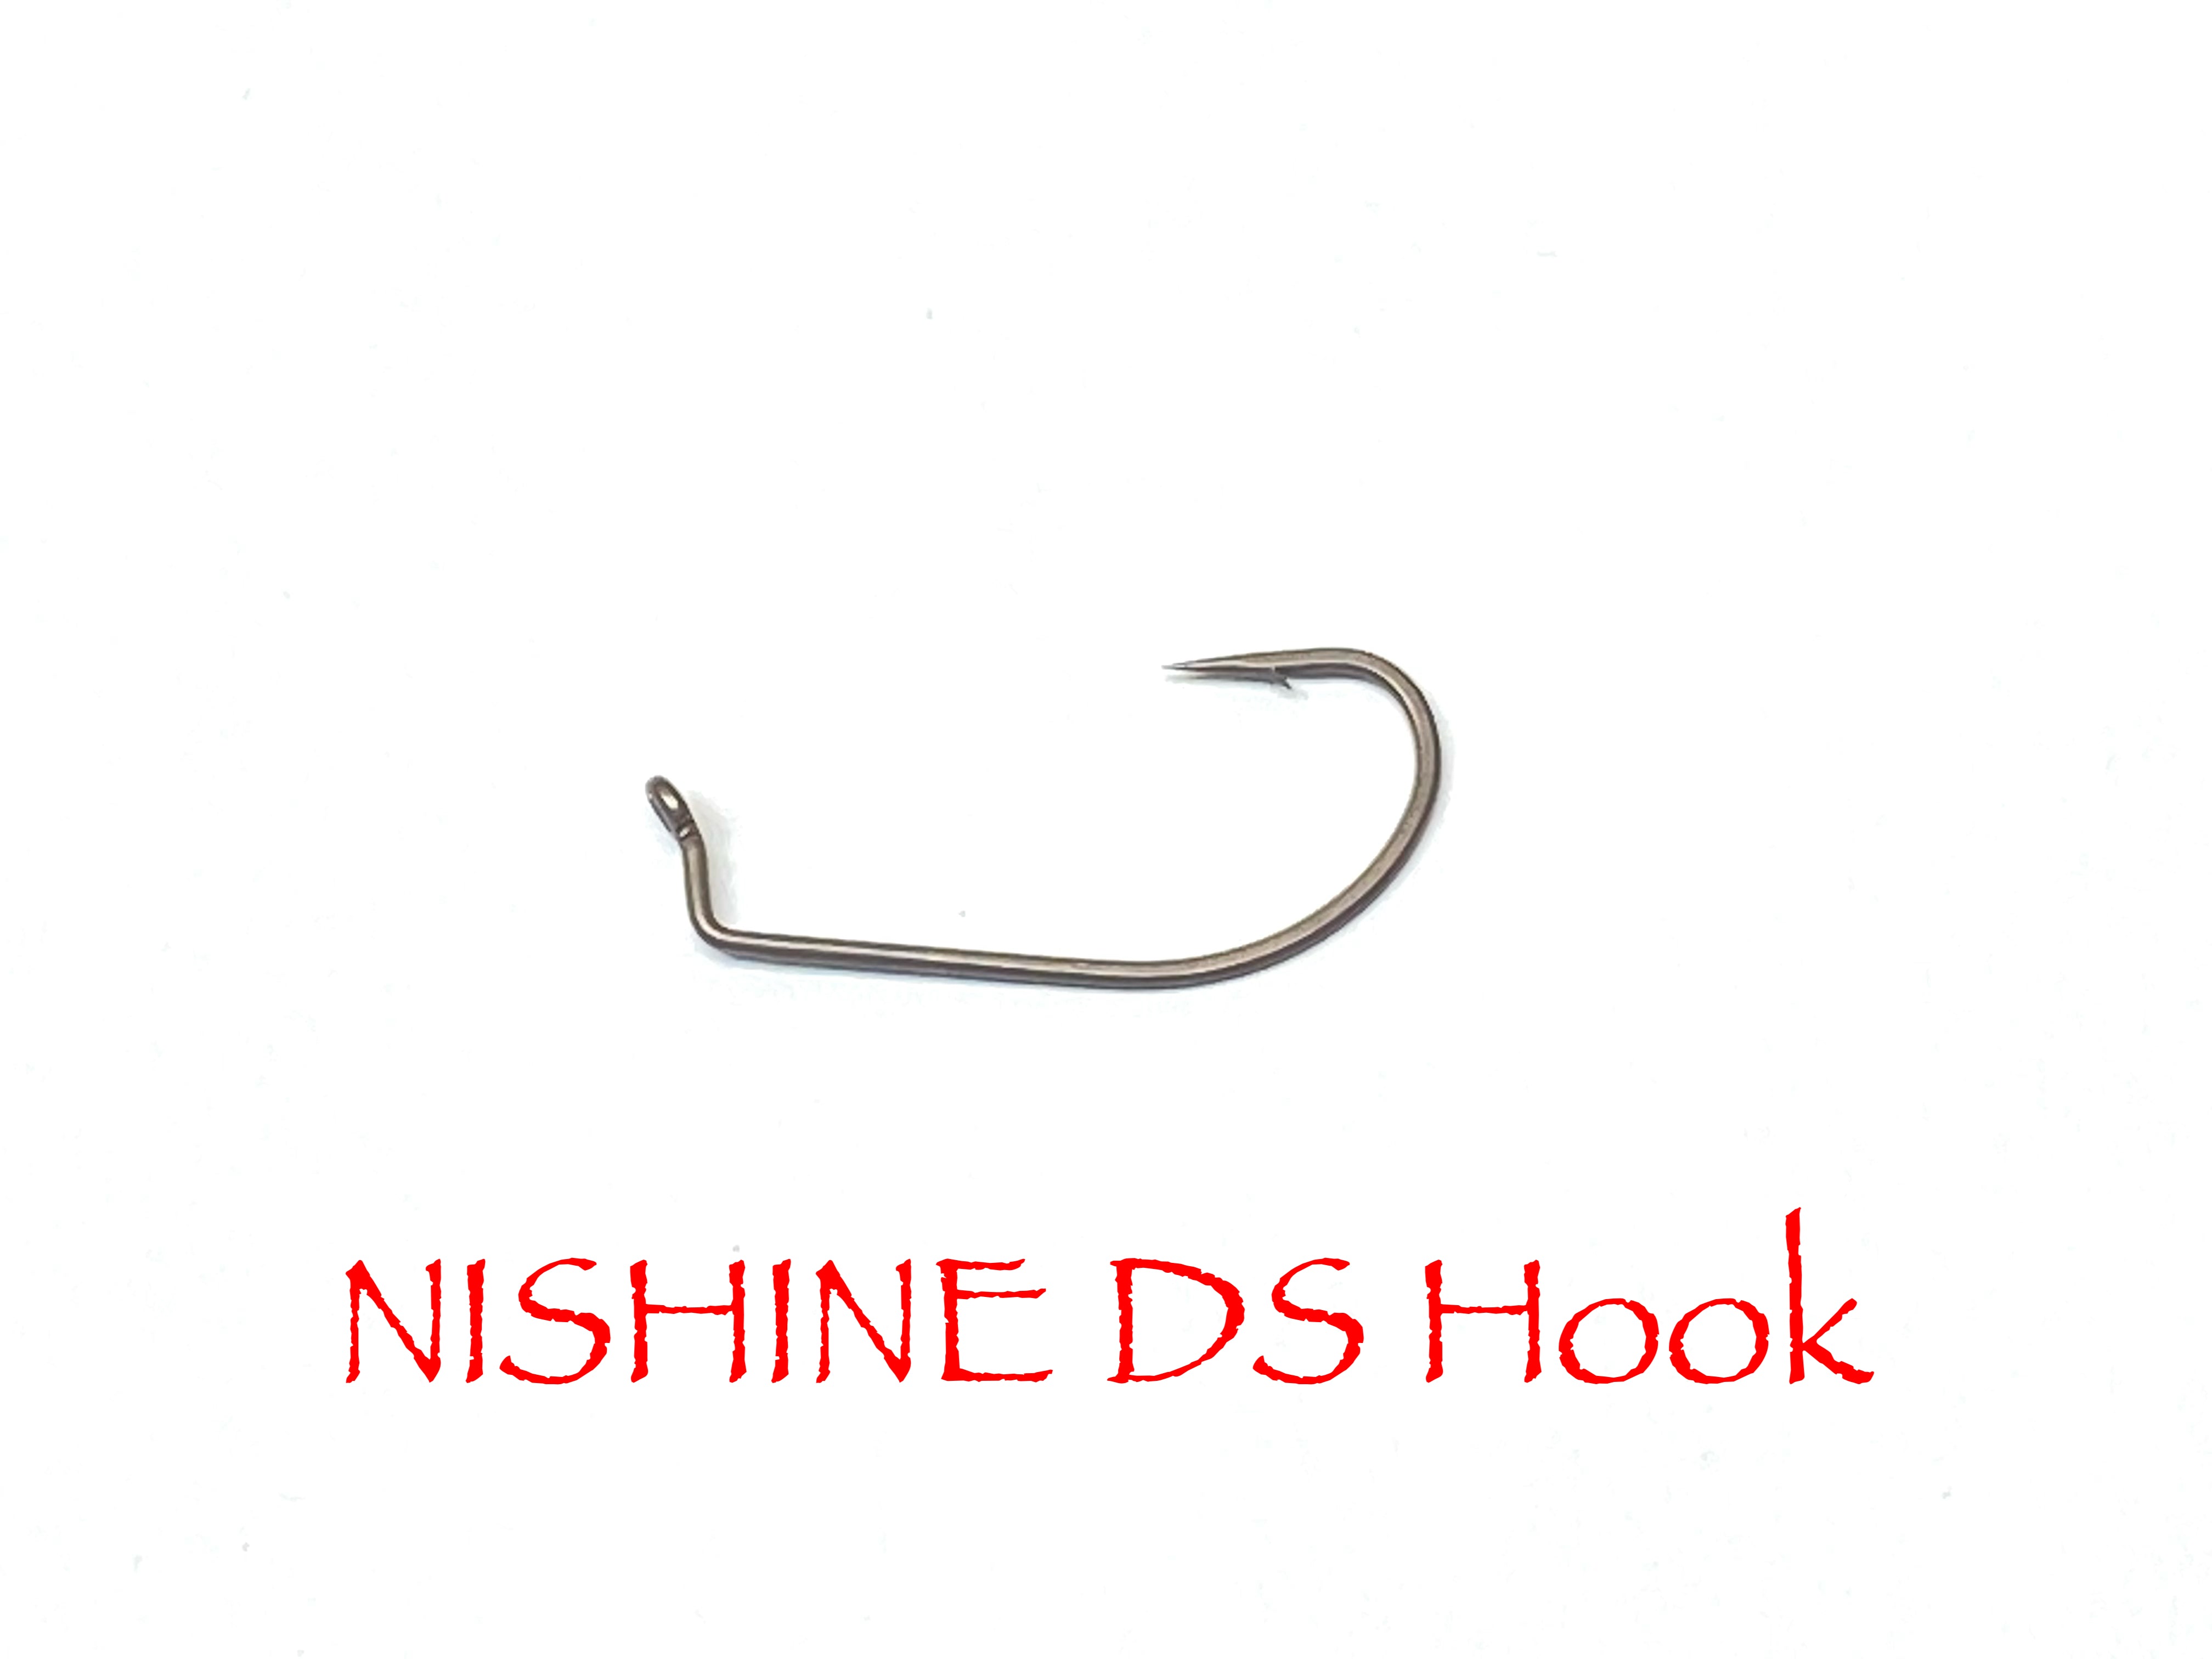 Nishine Dropshot Hook